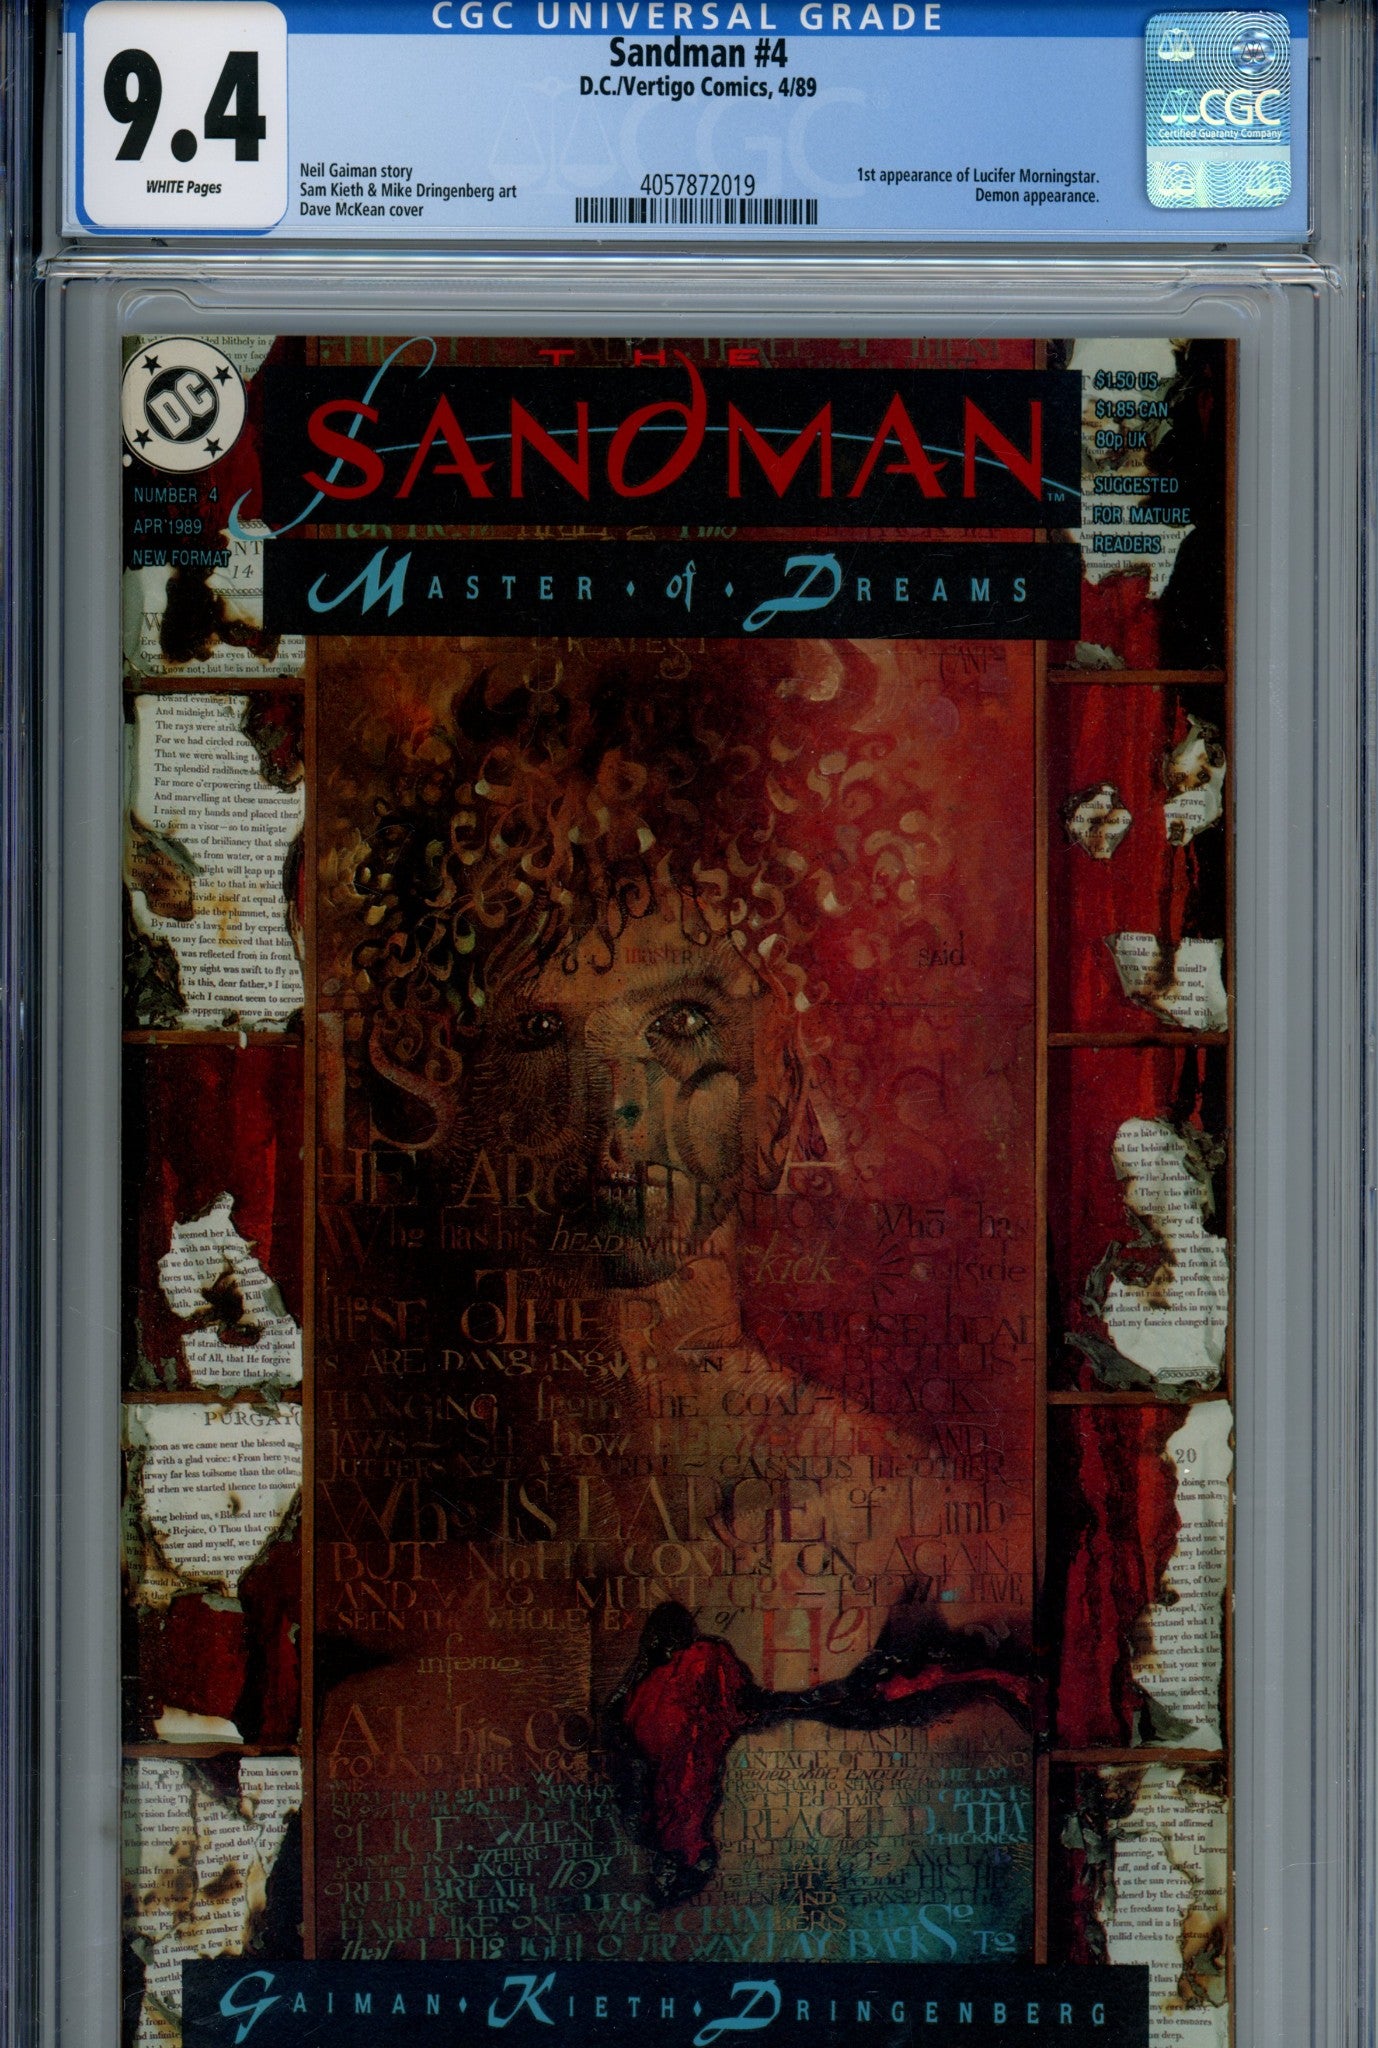 Sandman Vol 2 4 CGC 9.4 (1989)